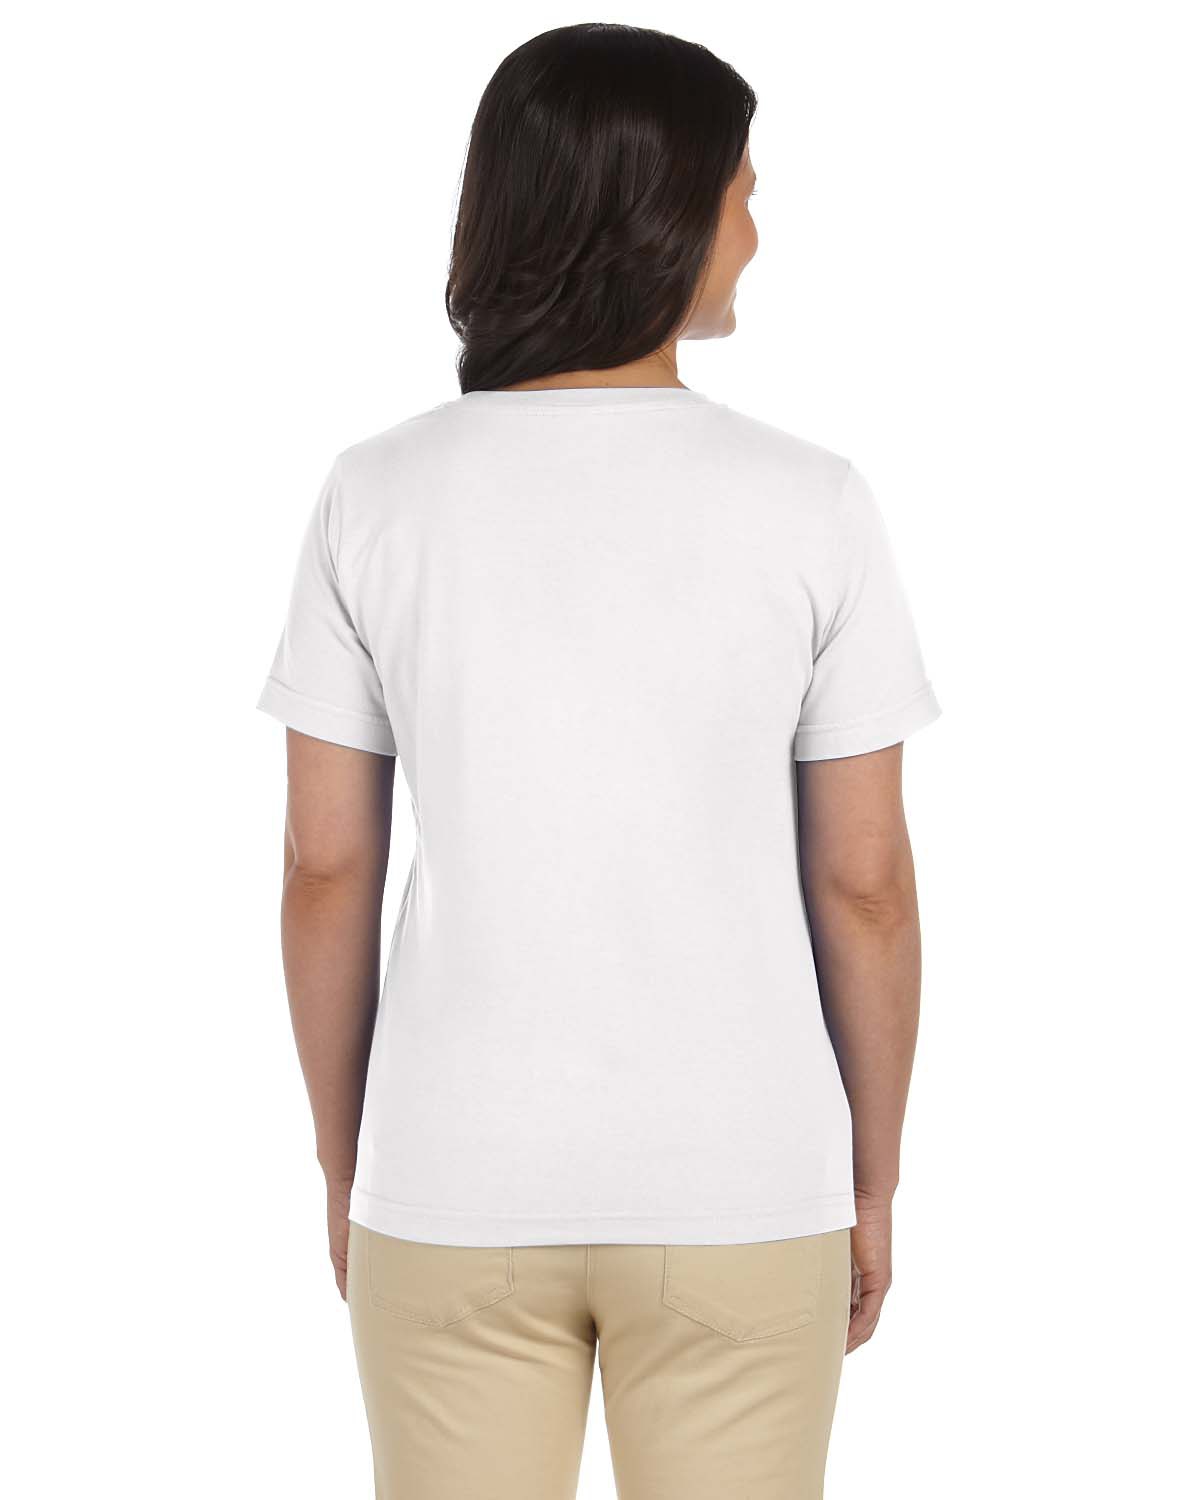 'LAT L-3587 Ladies V-Neck Premium Jersey T-Shirt'